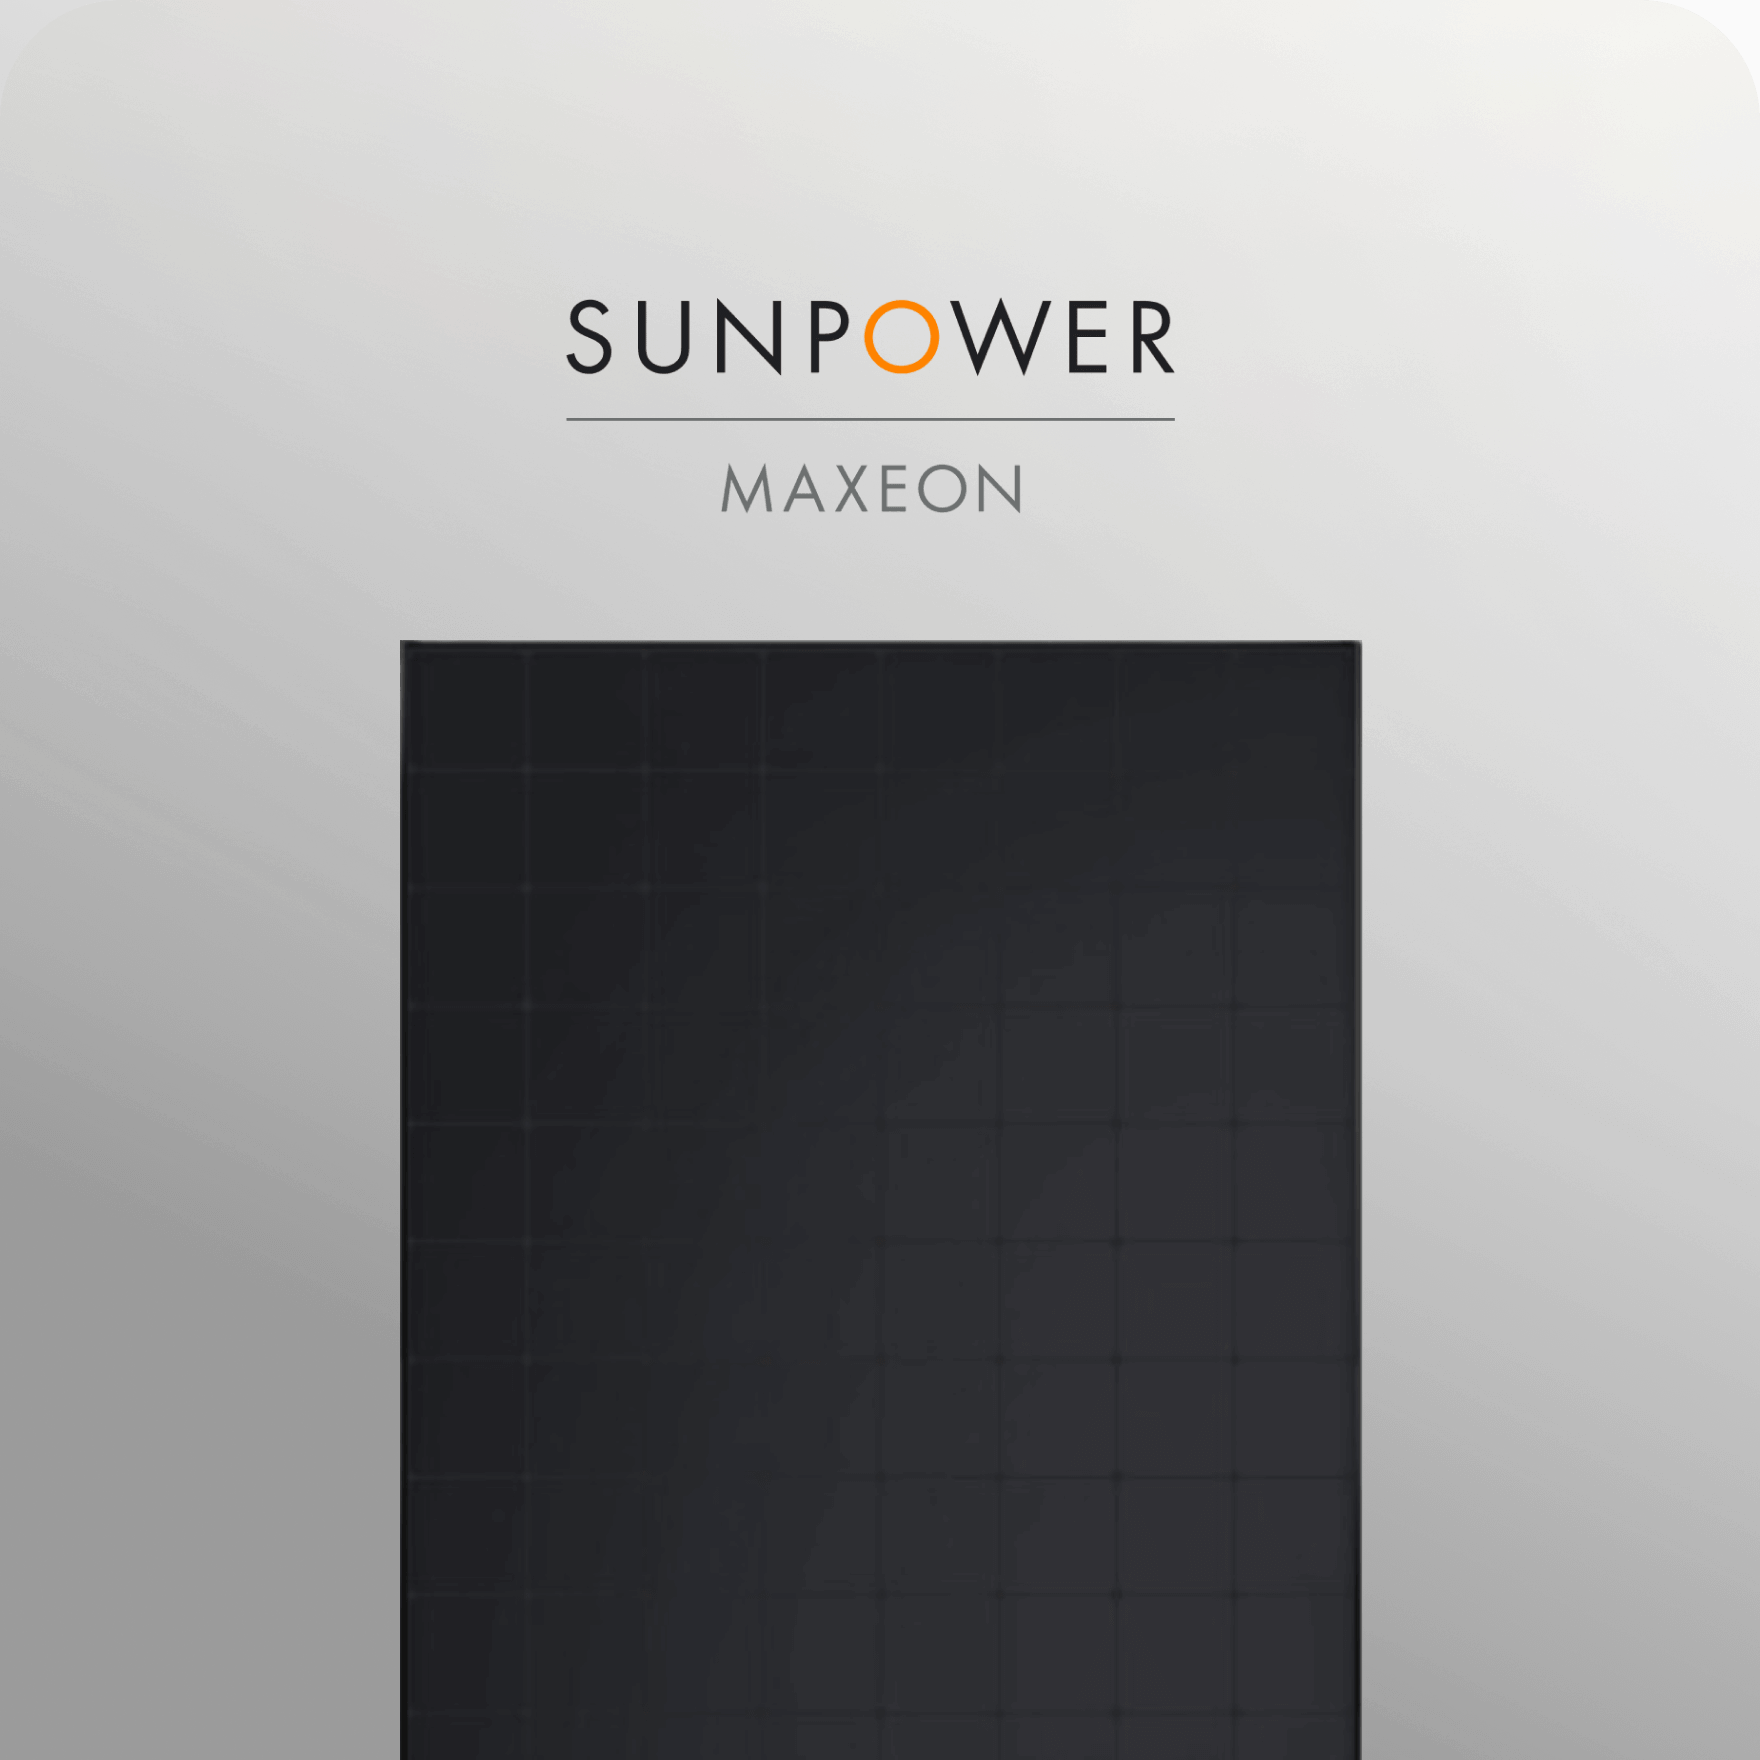 Sunpower Maxeon 3 solcellepaneler på tag med pool